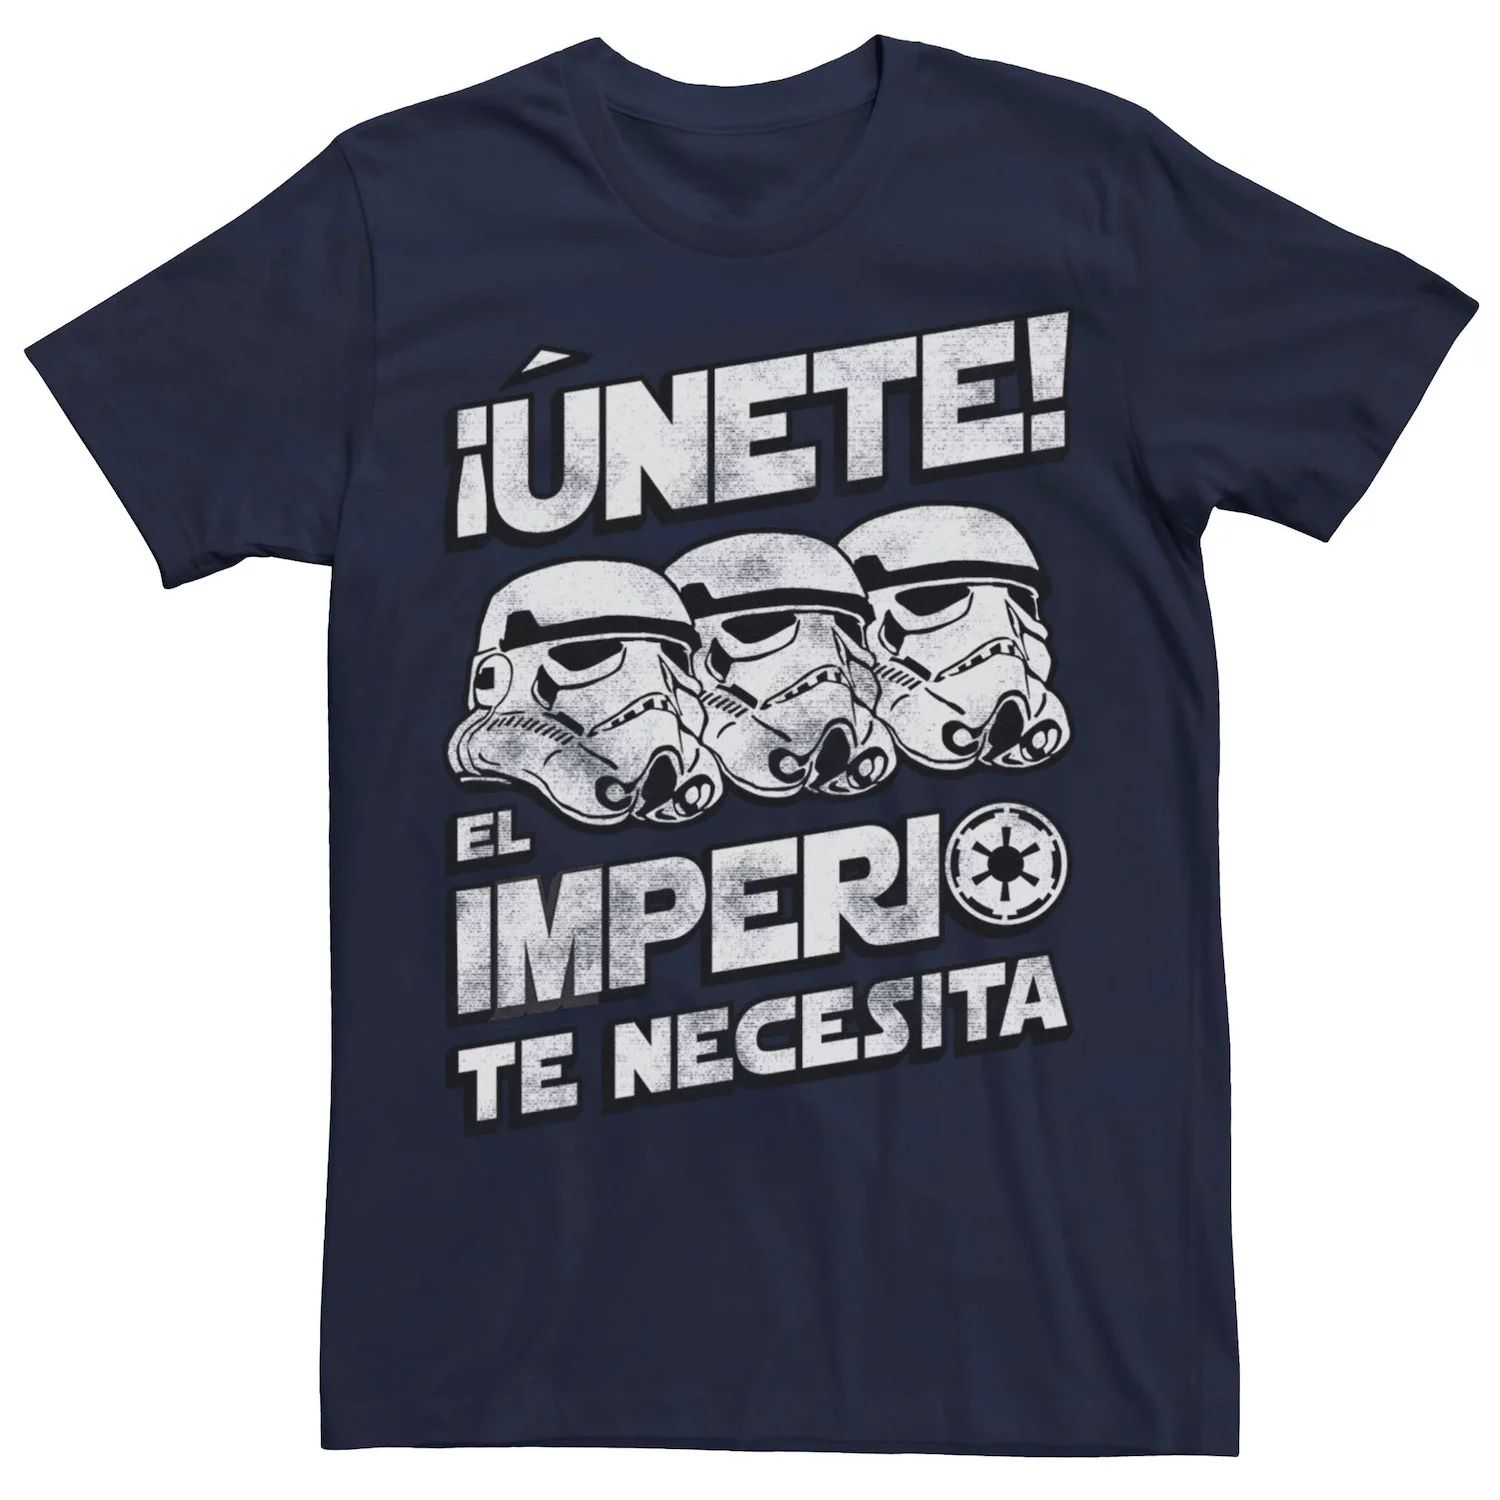 Мужская футболка с выцветшим портретом «Звездные войны» Unete El Imperio Te Necesita Stormtrooper Licensed Character, синий